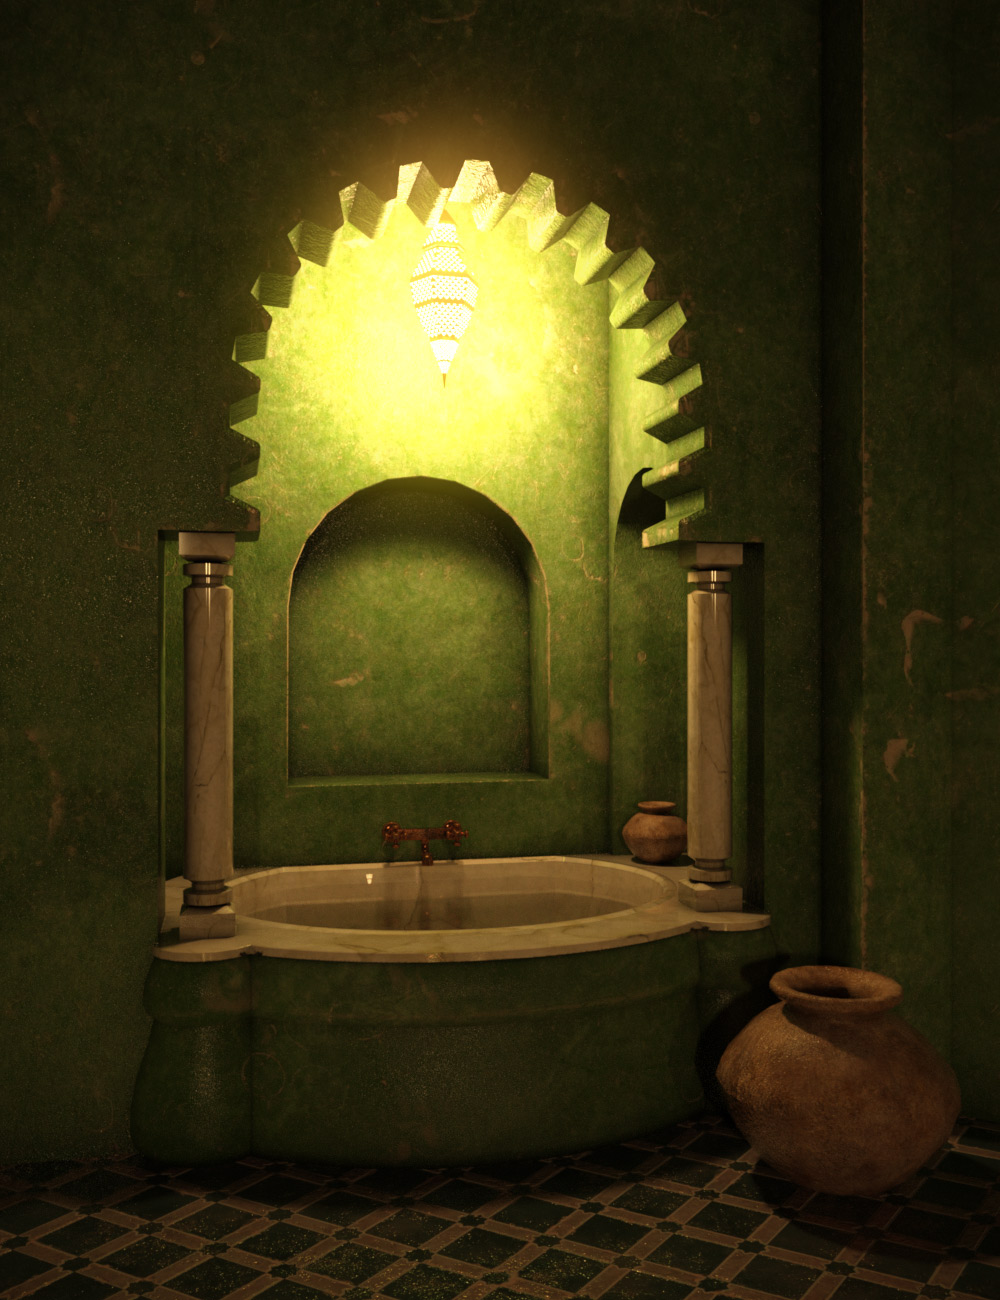 Hot Turkish Bath by: Dreamlight2 create HB, 3D Models by Daz 3D